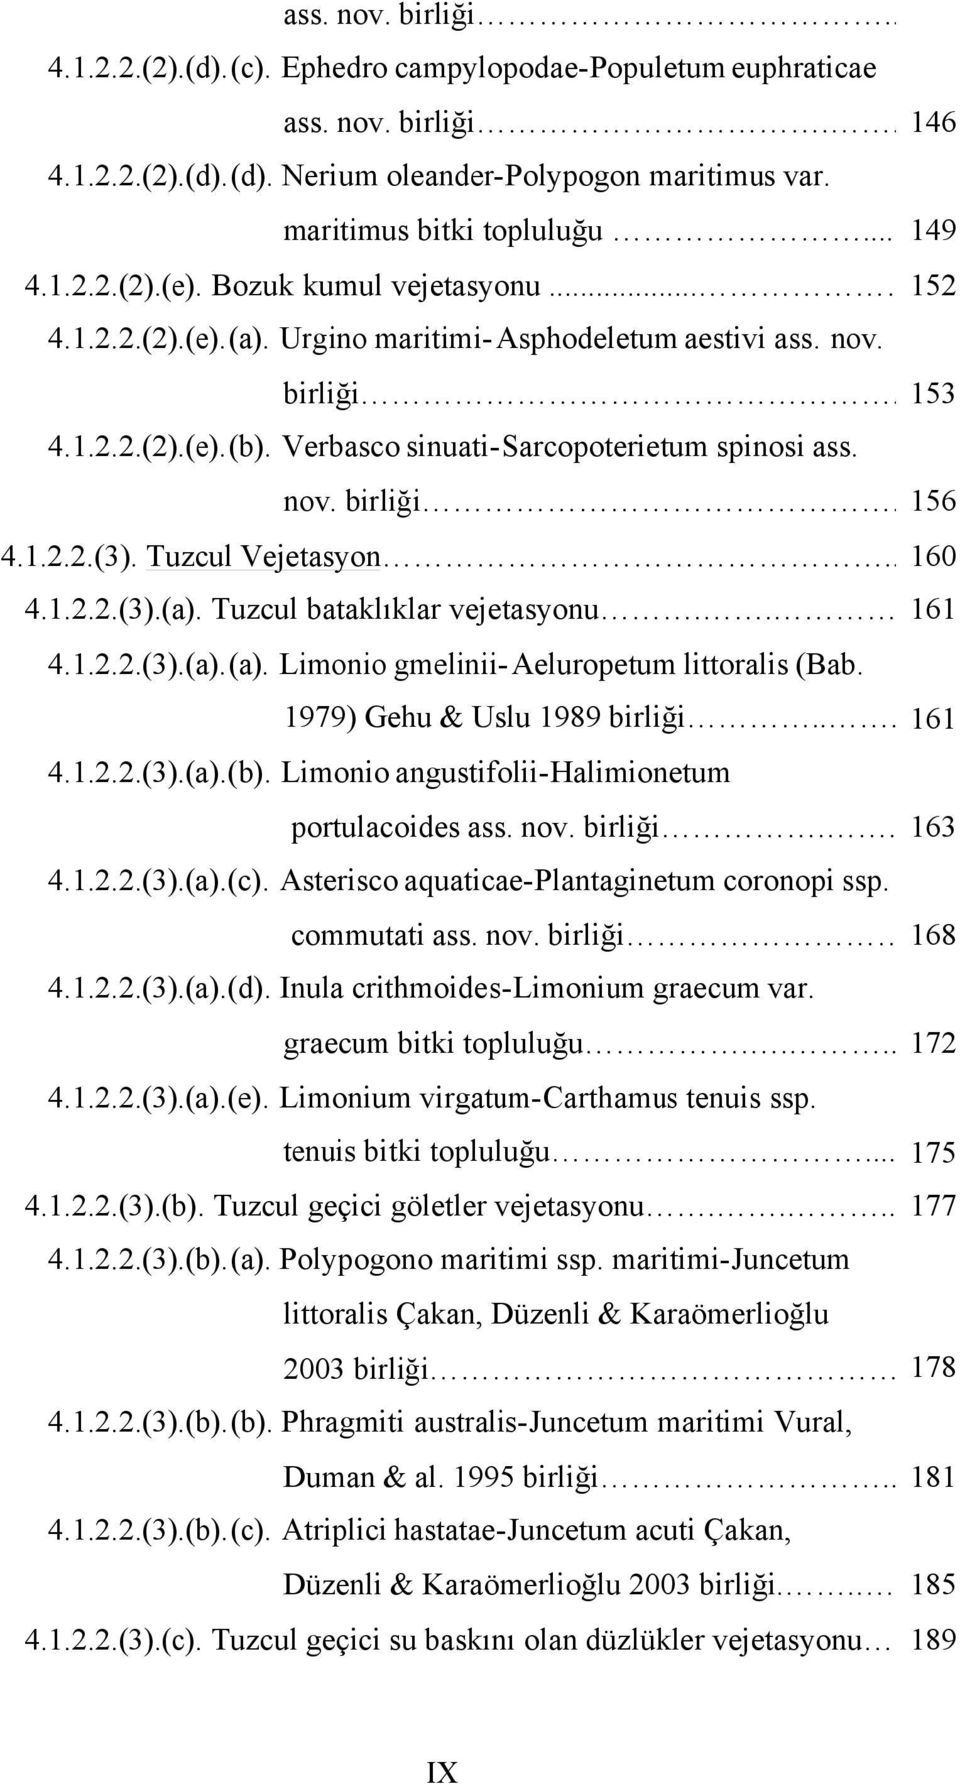 Tuzcul bataklıklar vejetasyonu 161 42(3)(a)(a) Limonio gmelinii- Aeluropetum littoralis (Bab 1979) Gehu & Uslu 1989 birliği 161 42(3)(a)(b) Limonio angustifolii-halimionetum portulacoides ass nov